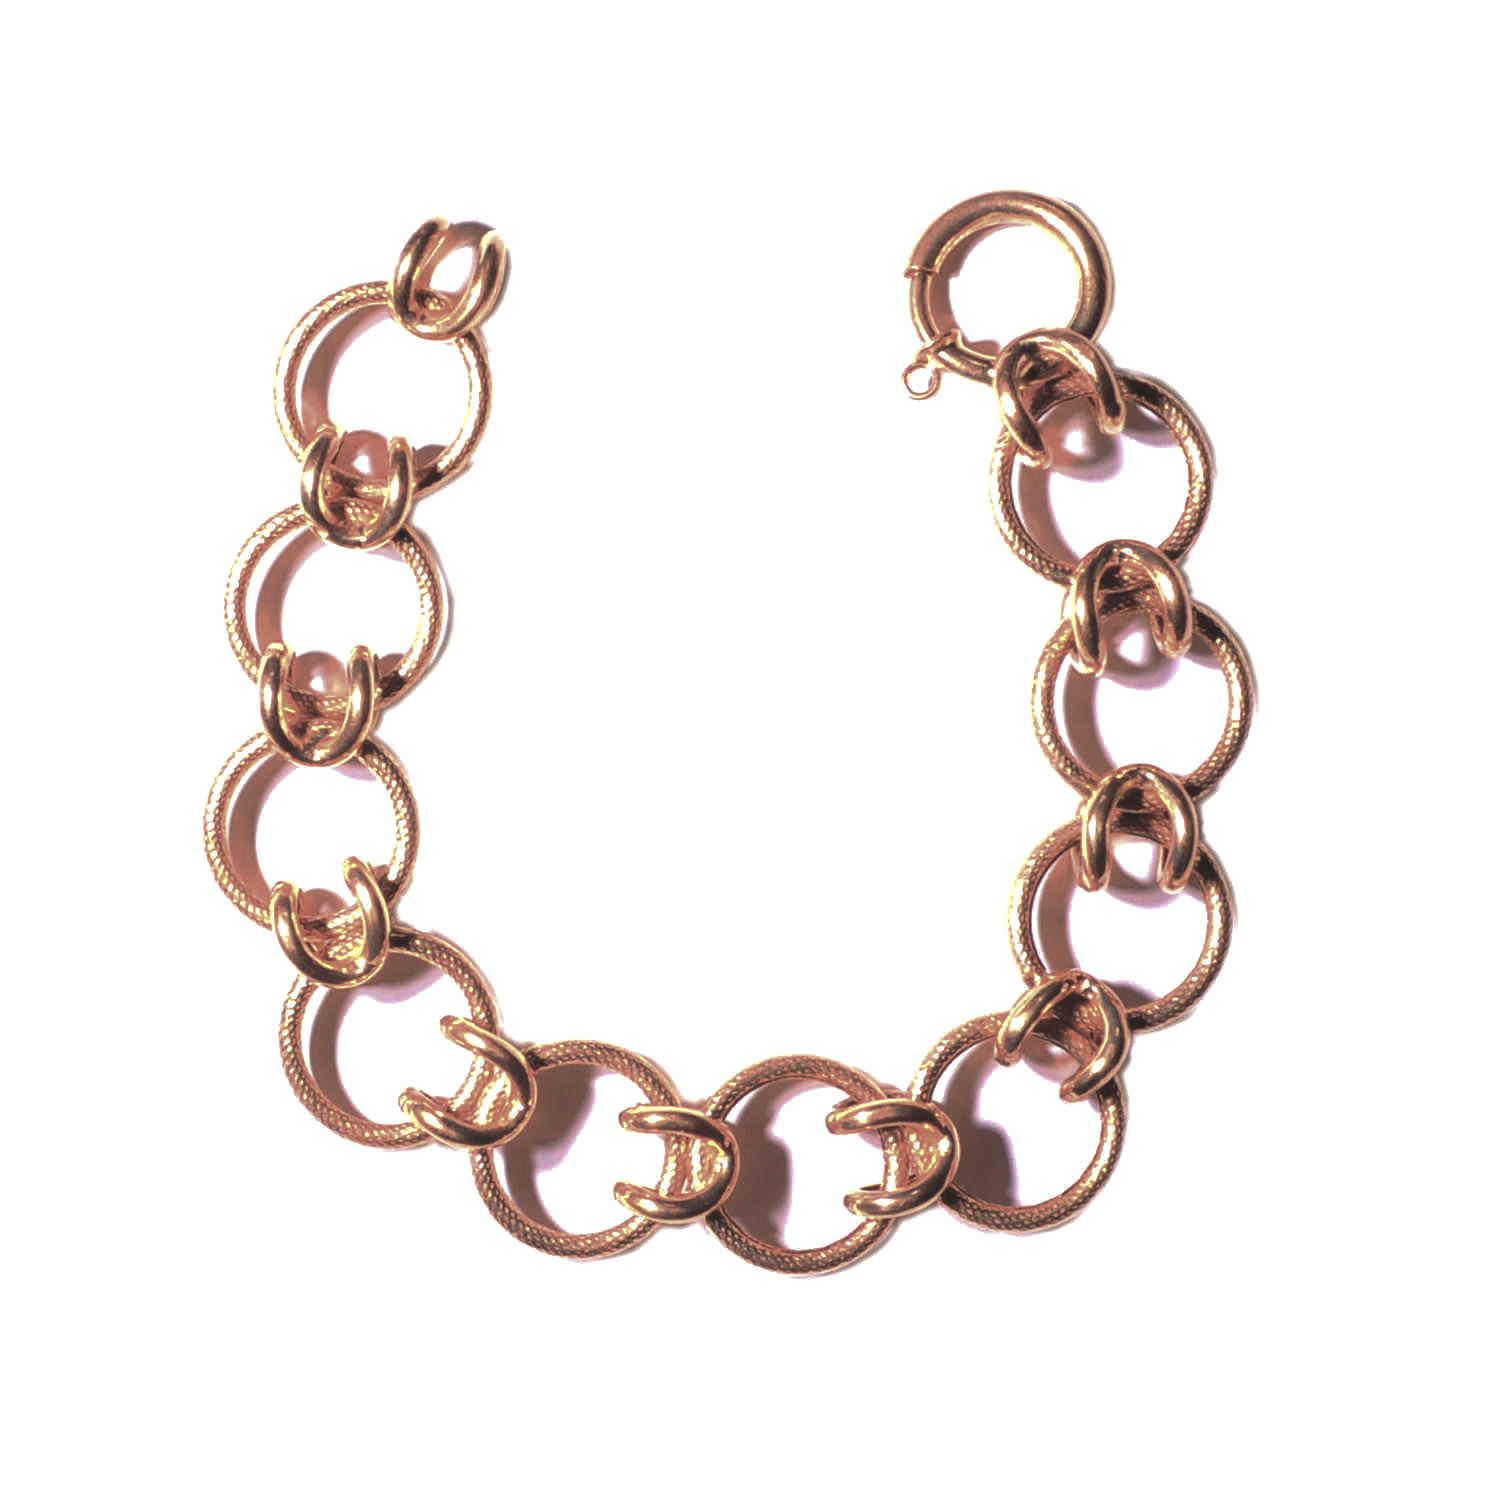 18ct Solid Gold Bracelet Circular Links 13.9gram